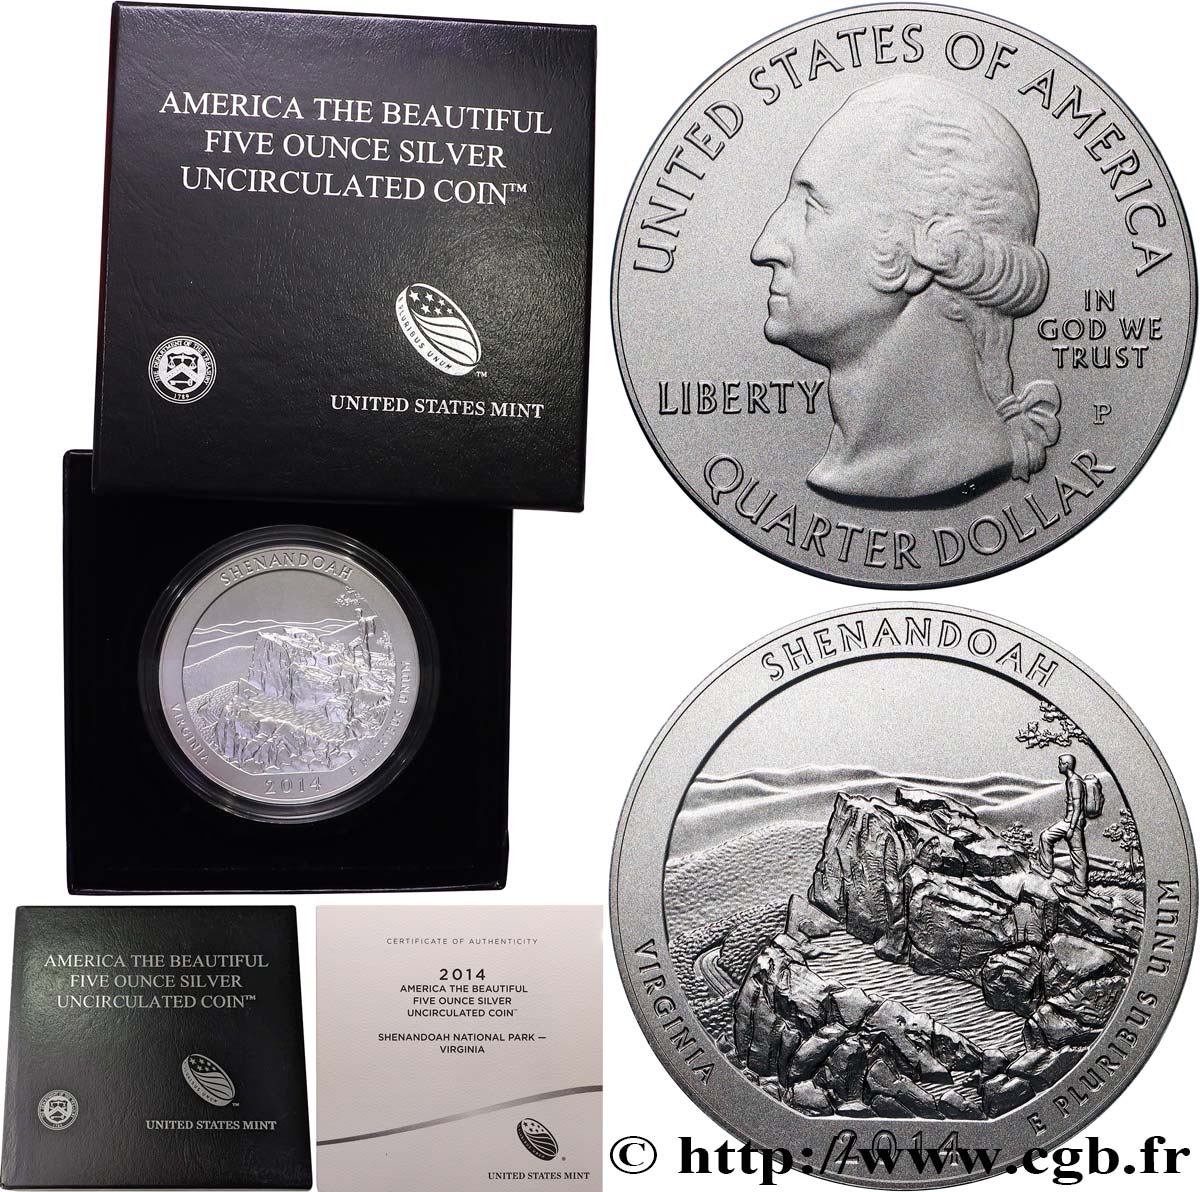 UNITED STATES OF AMERICA 25 cent - 5 onces d’argent FDC - SHENANDOAH - Virginia 2014 Philadelphie MS 